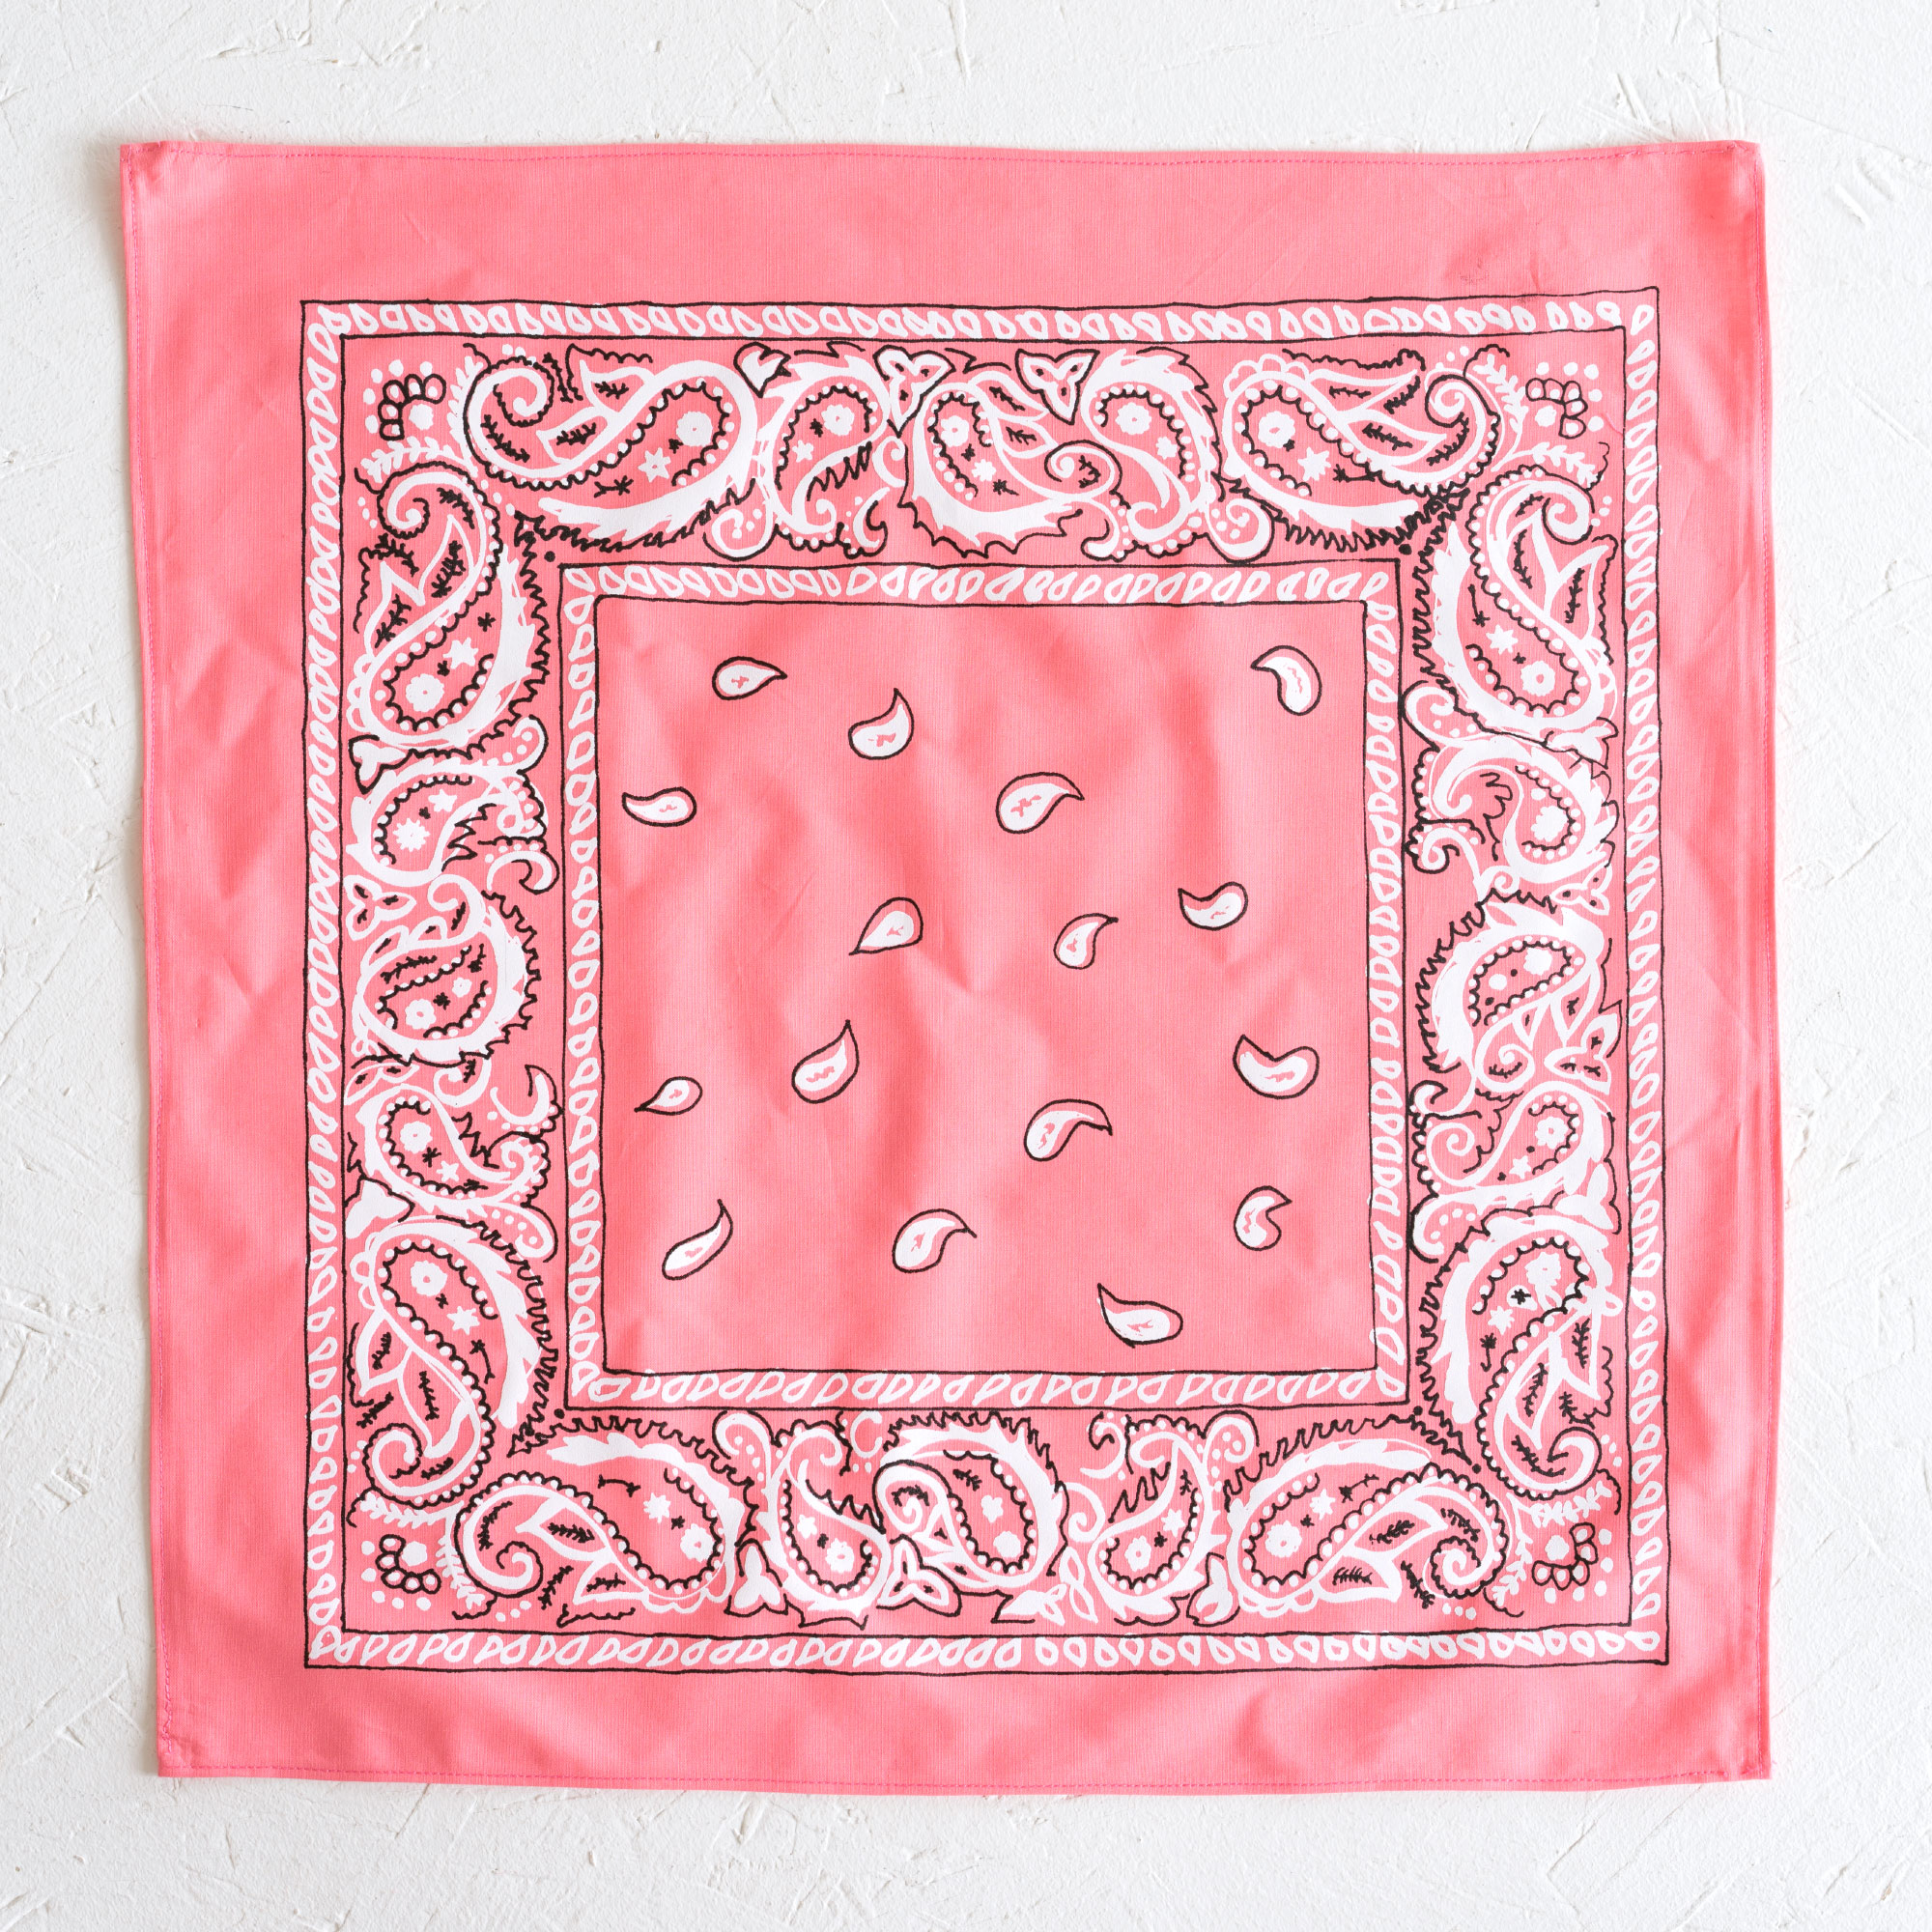 Nancy Davidson, *Hanky Code* (Light Pink), 2016, Two color silkscreen on hand cut & sewn cotton, 17 x 17 inches (43.18 x 43.18 cm)